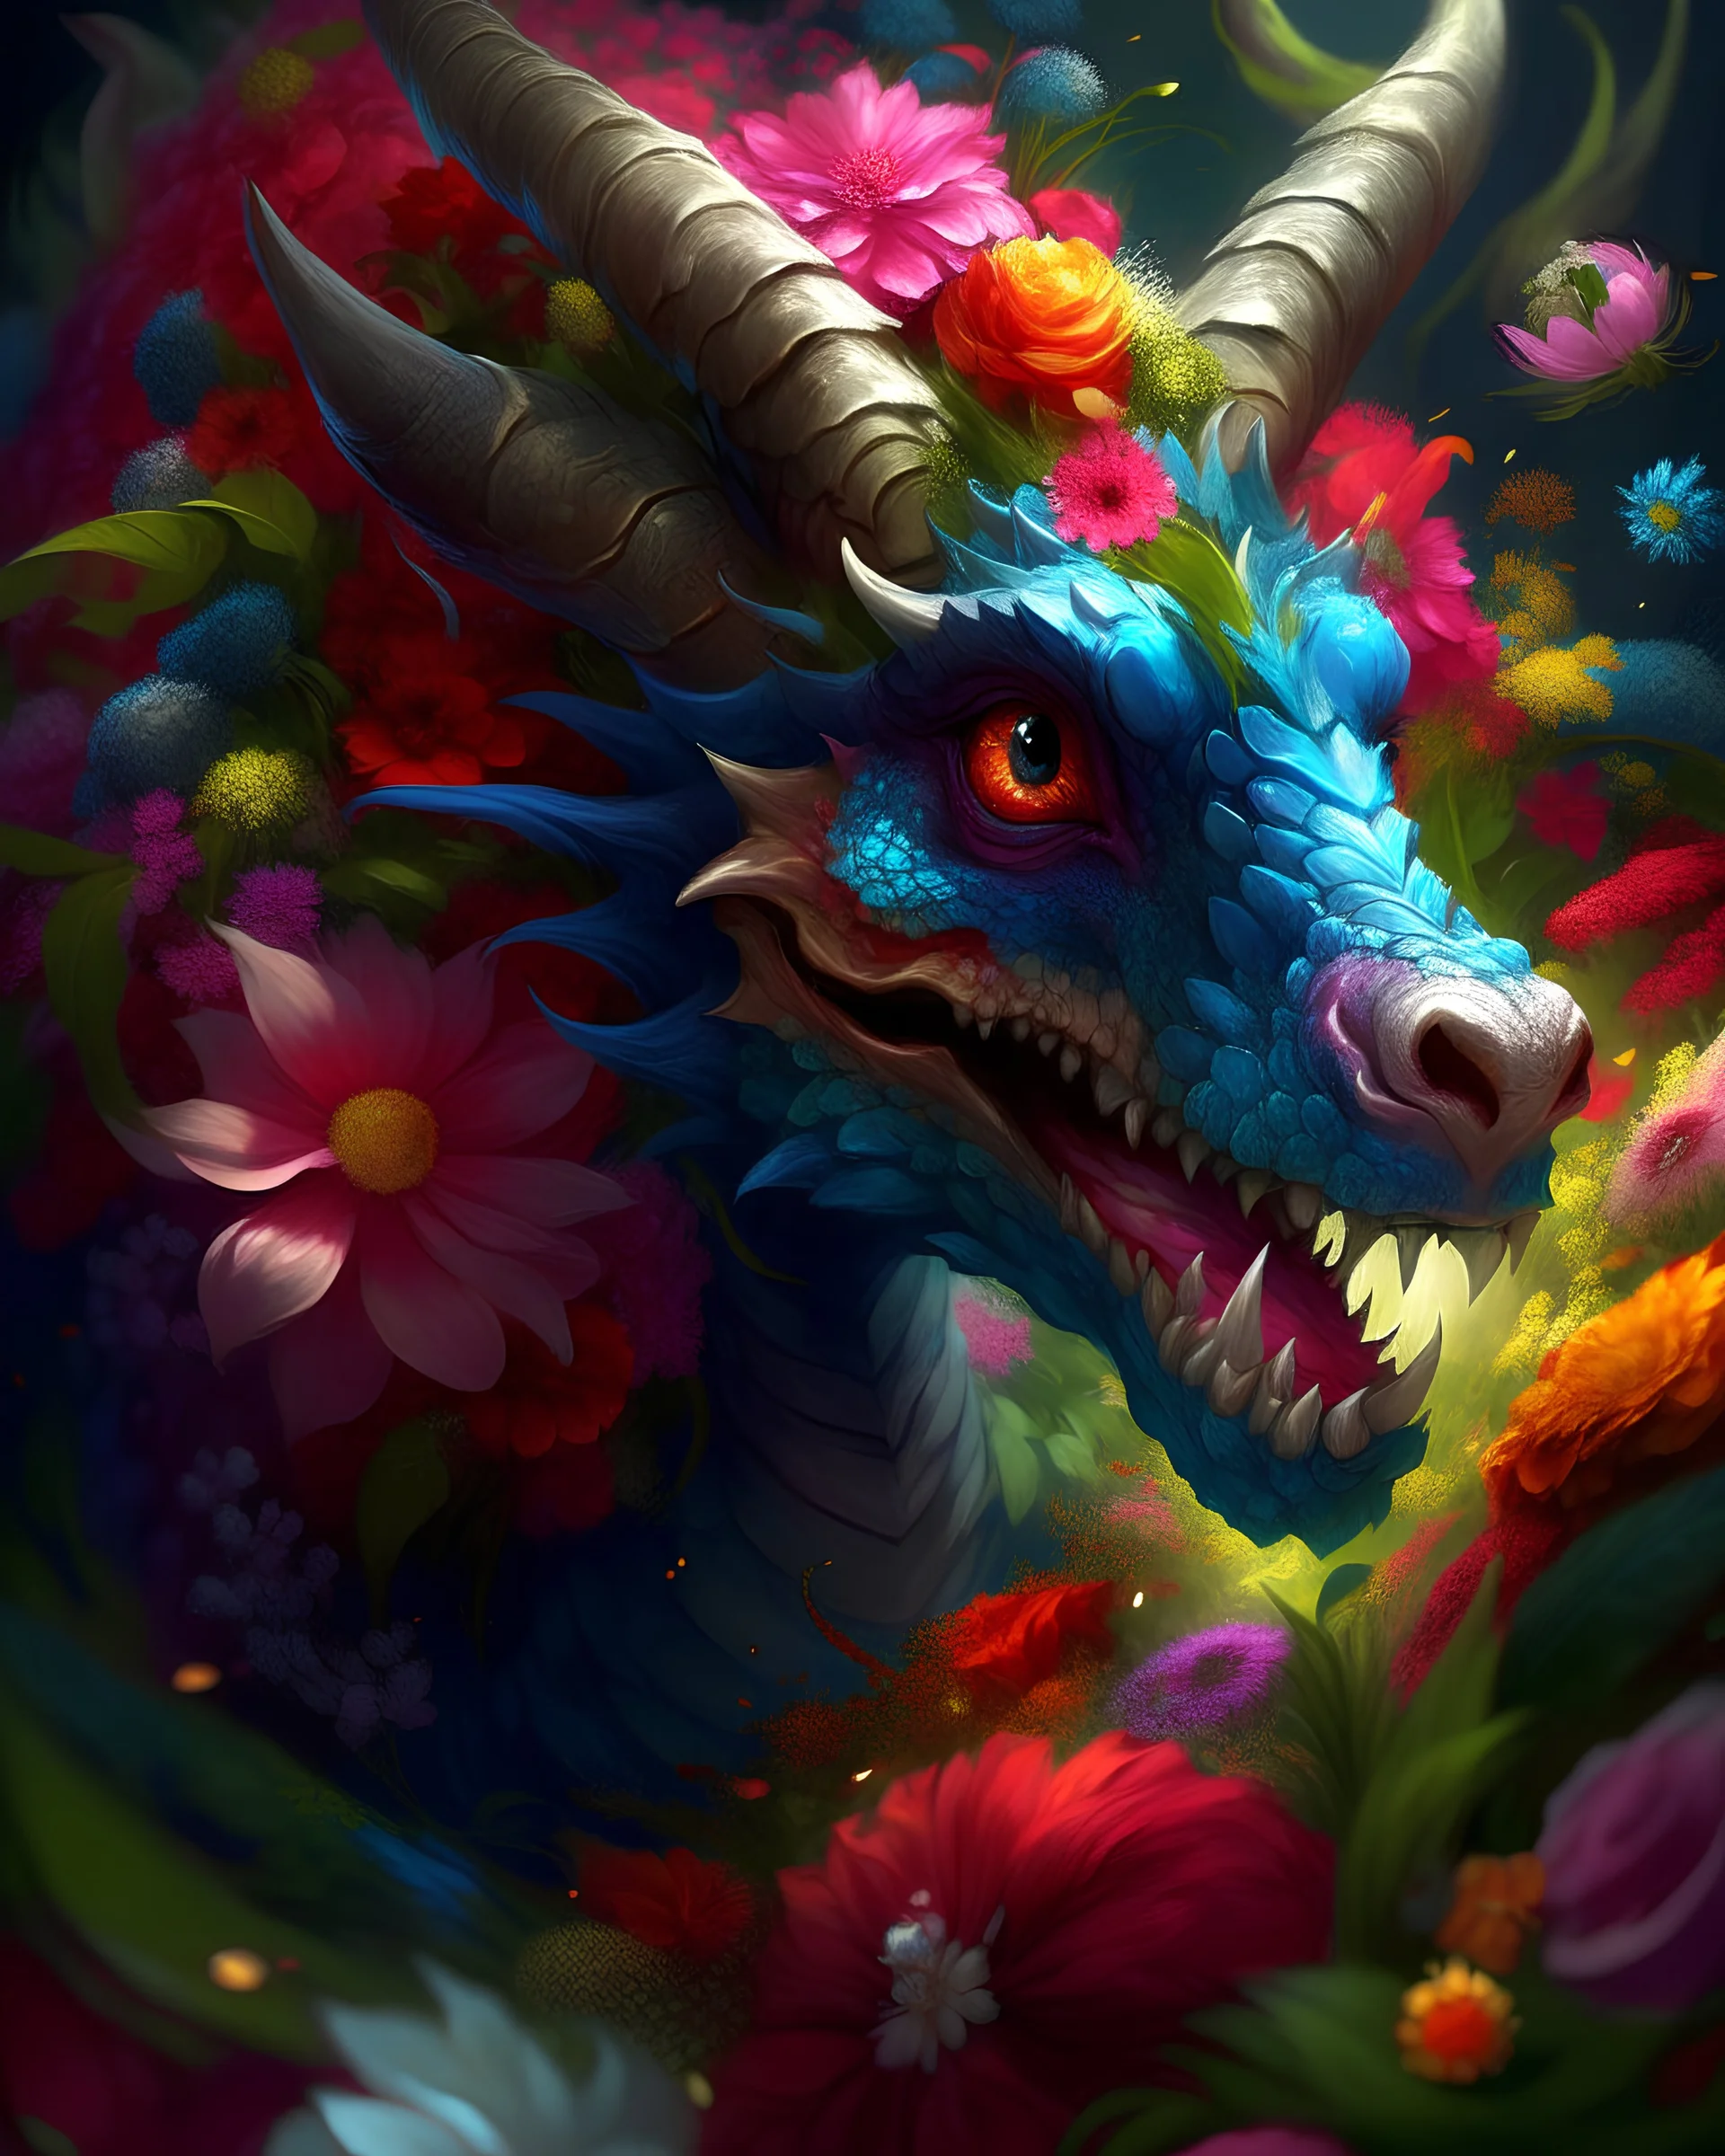 Bigger horn, more sharp eyes, Beautiful dragon, surrounded by flowers, colourful digital art, ai art, fantasy, mythology